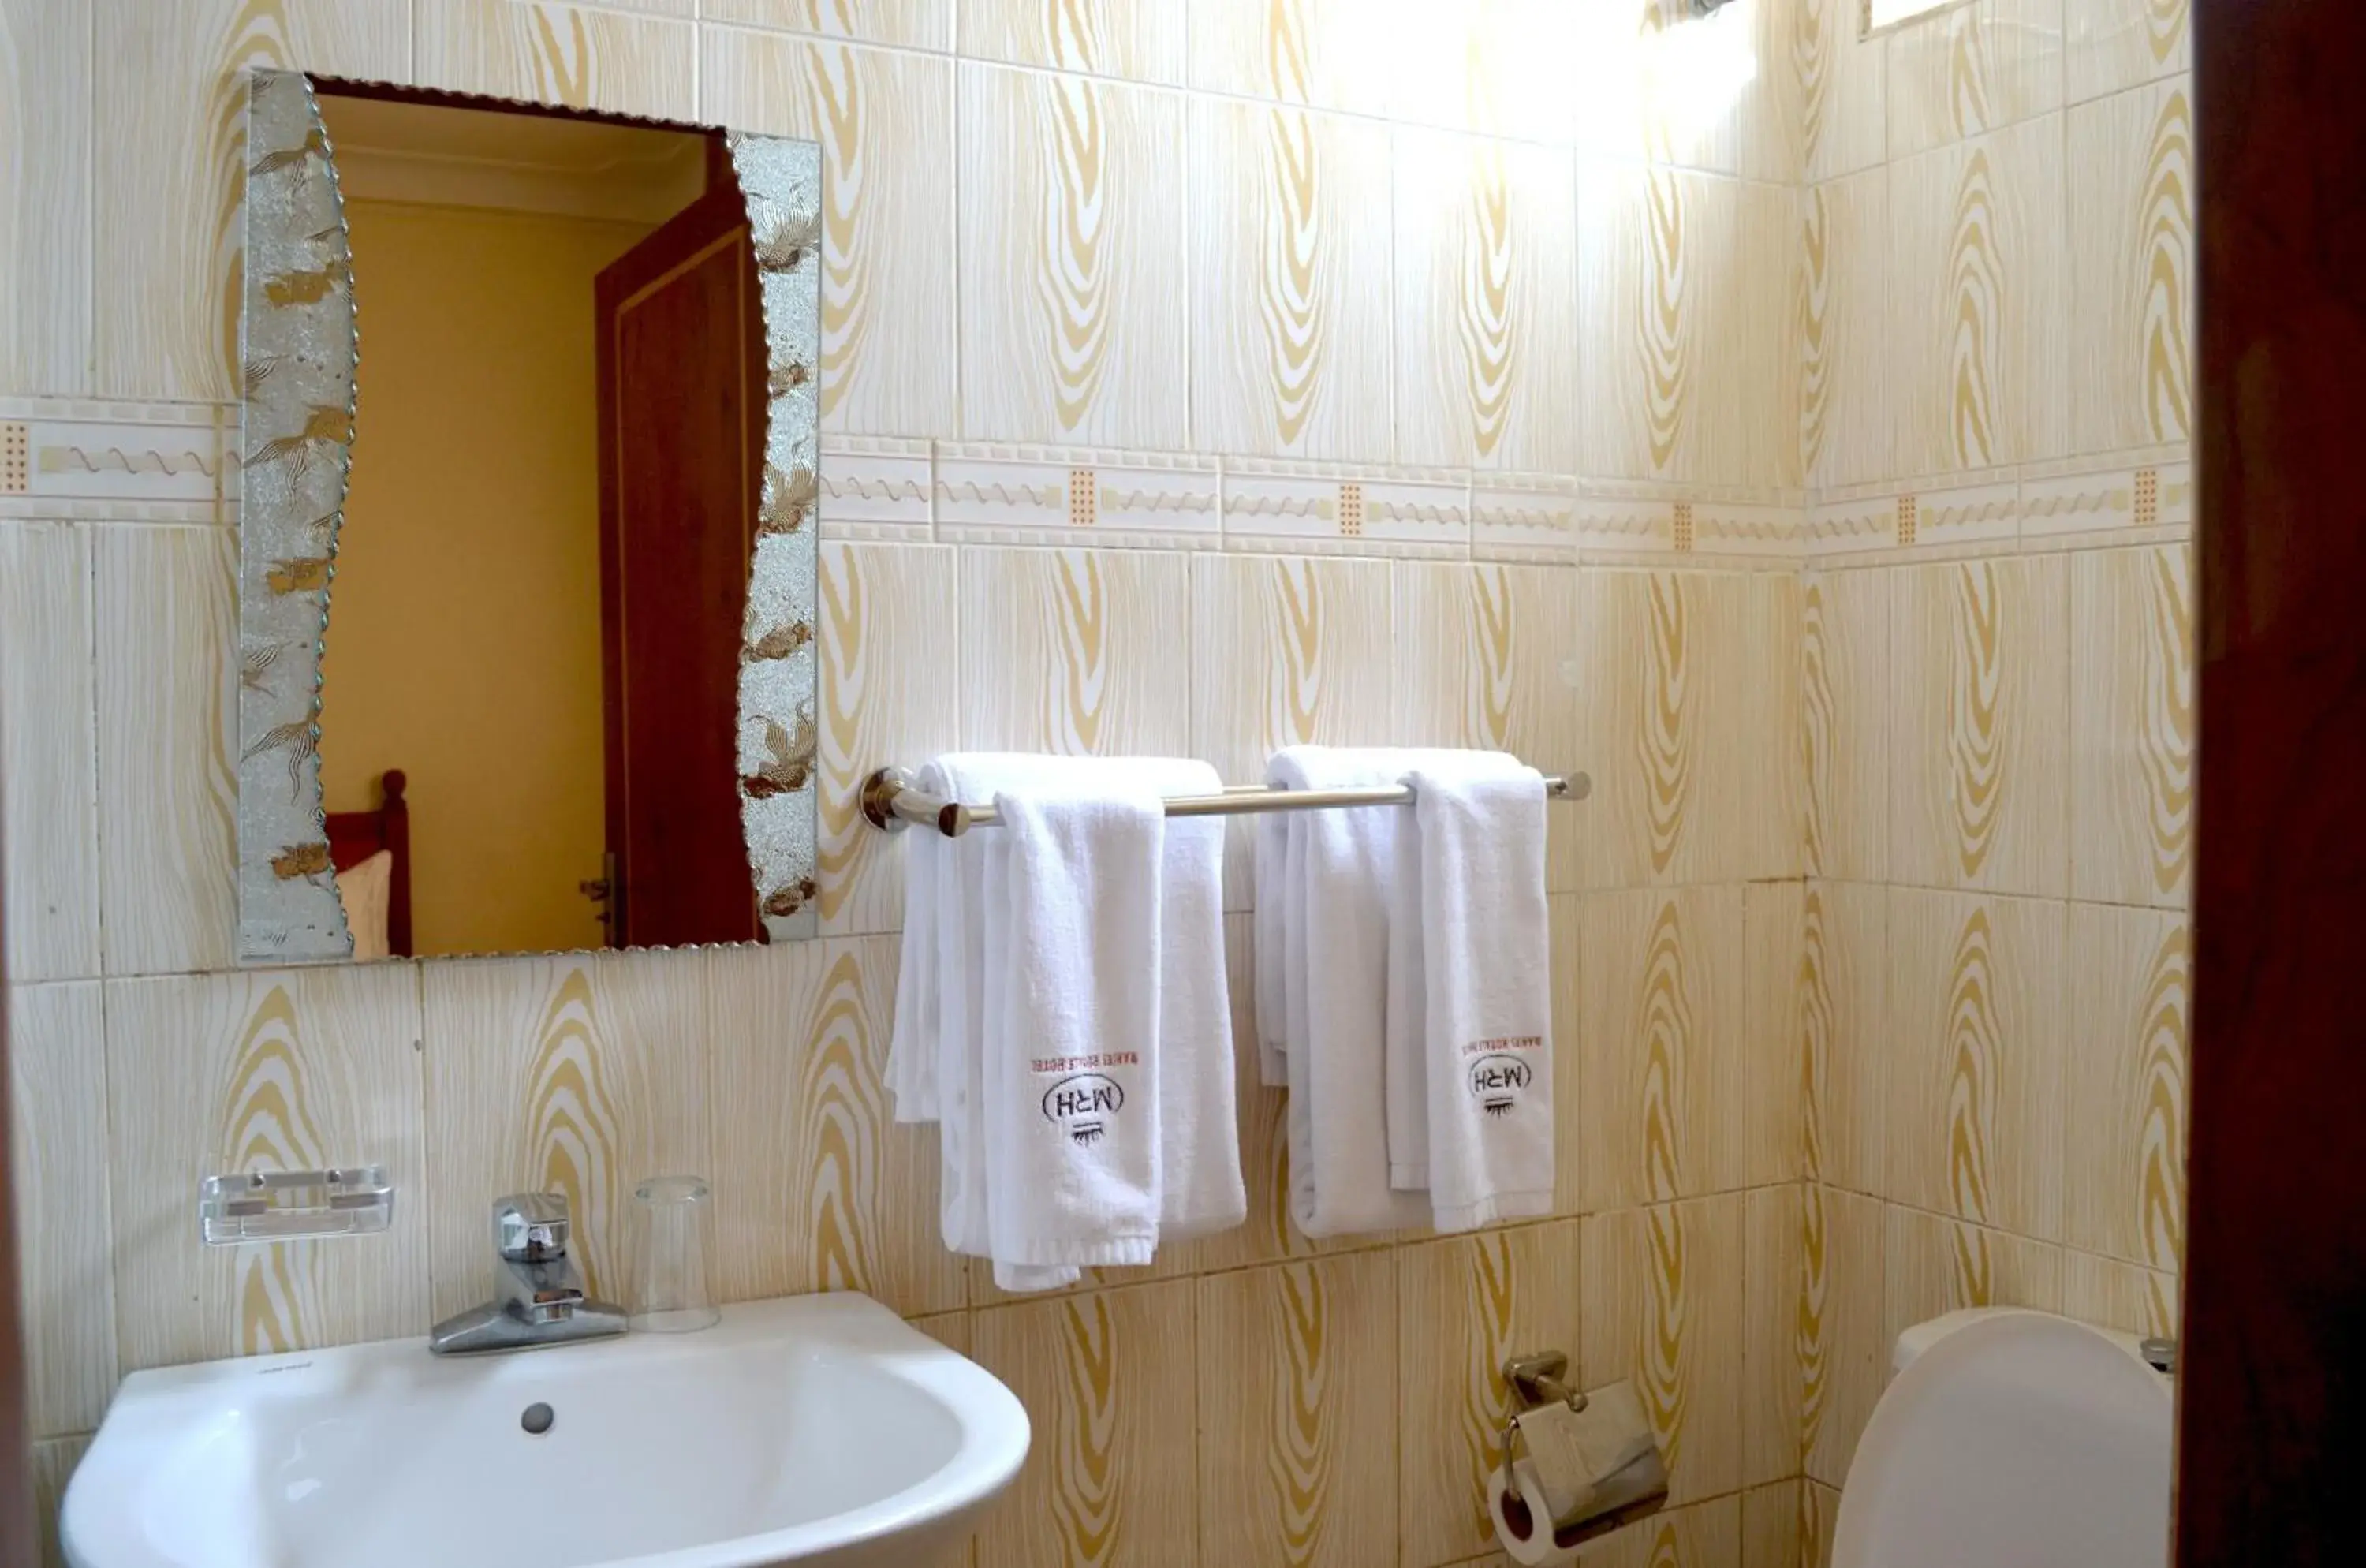 Bathroom in Marie's Royale Hotel